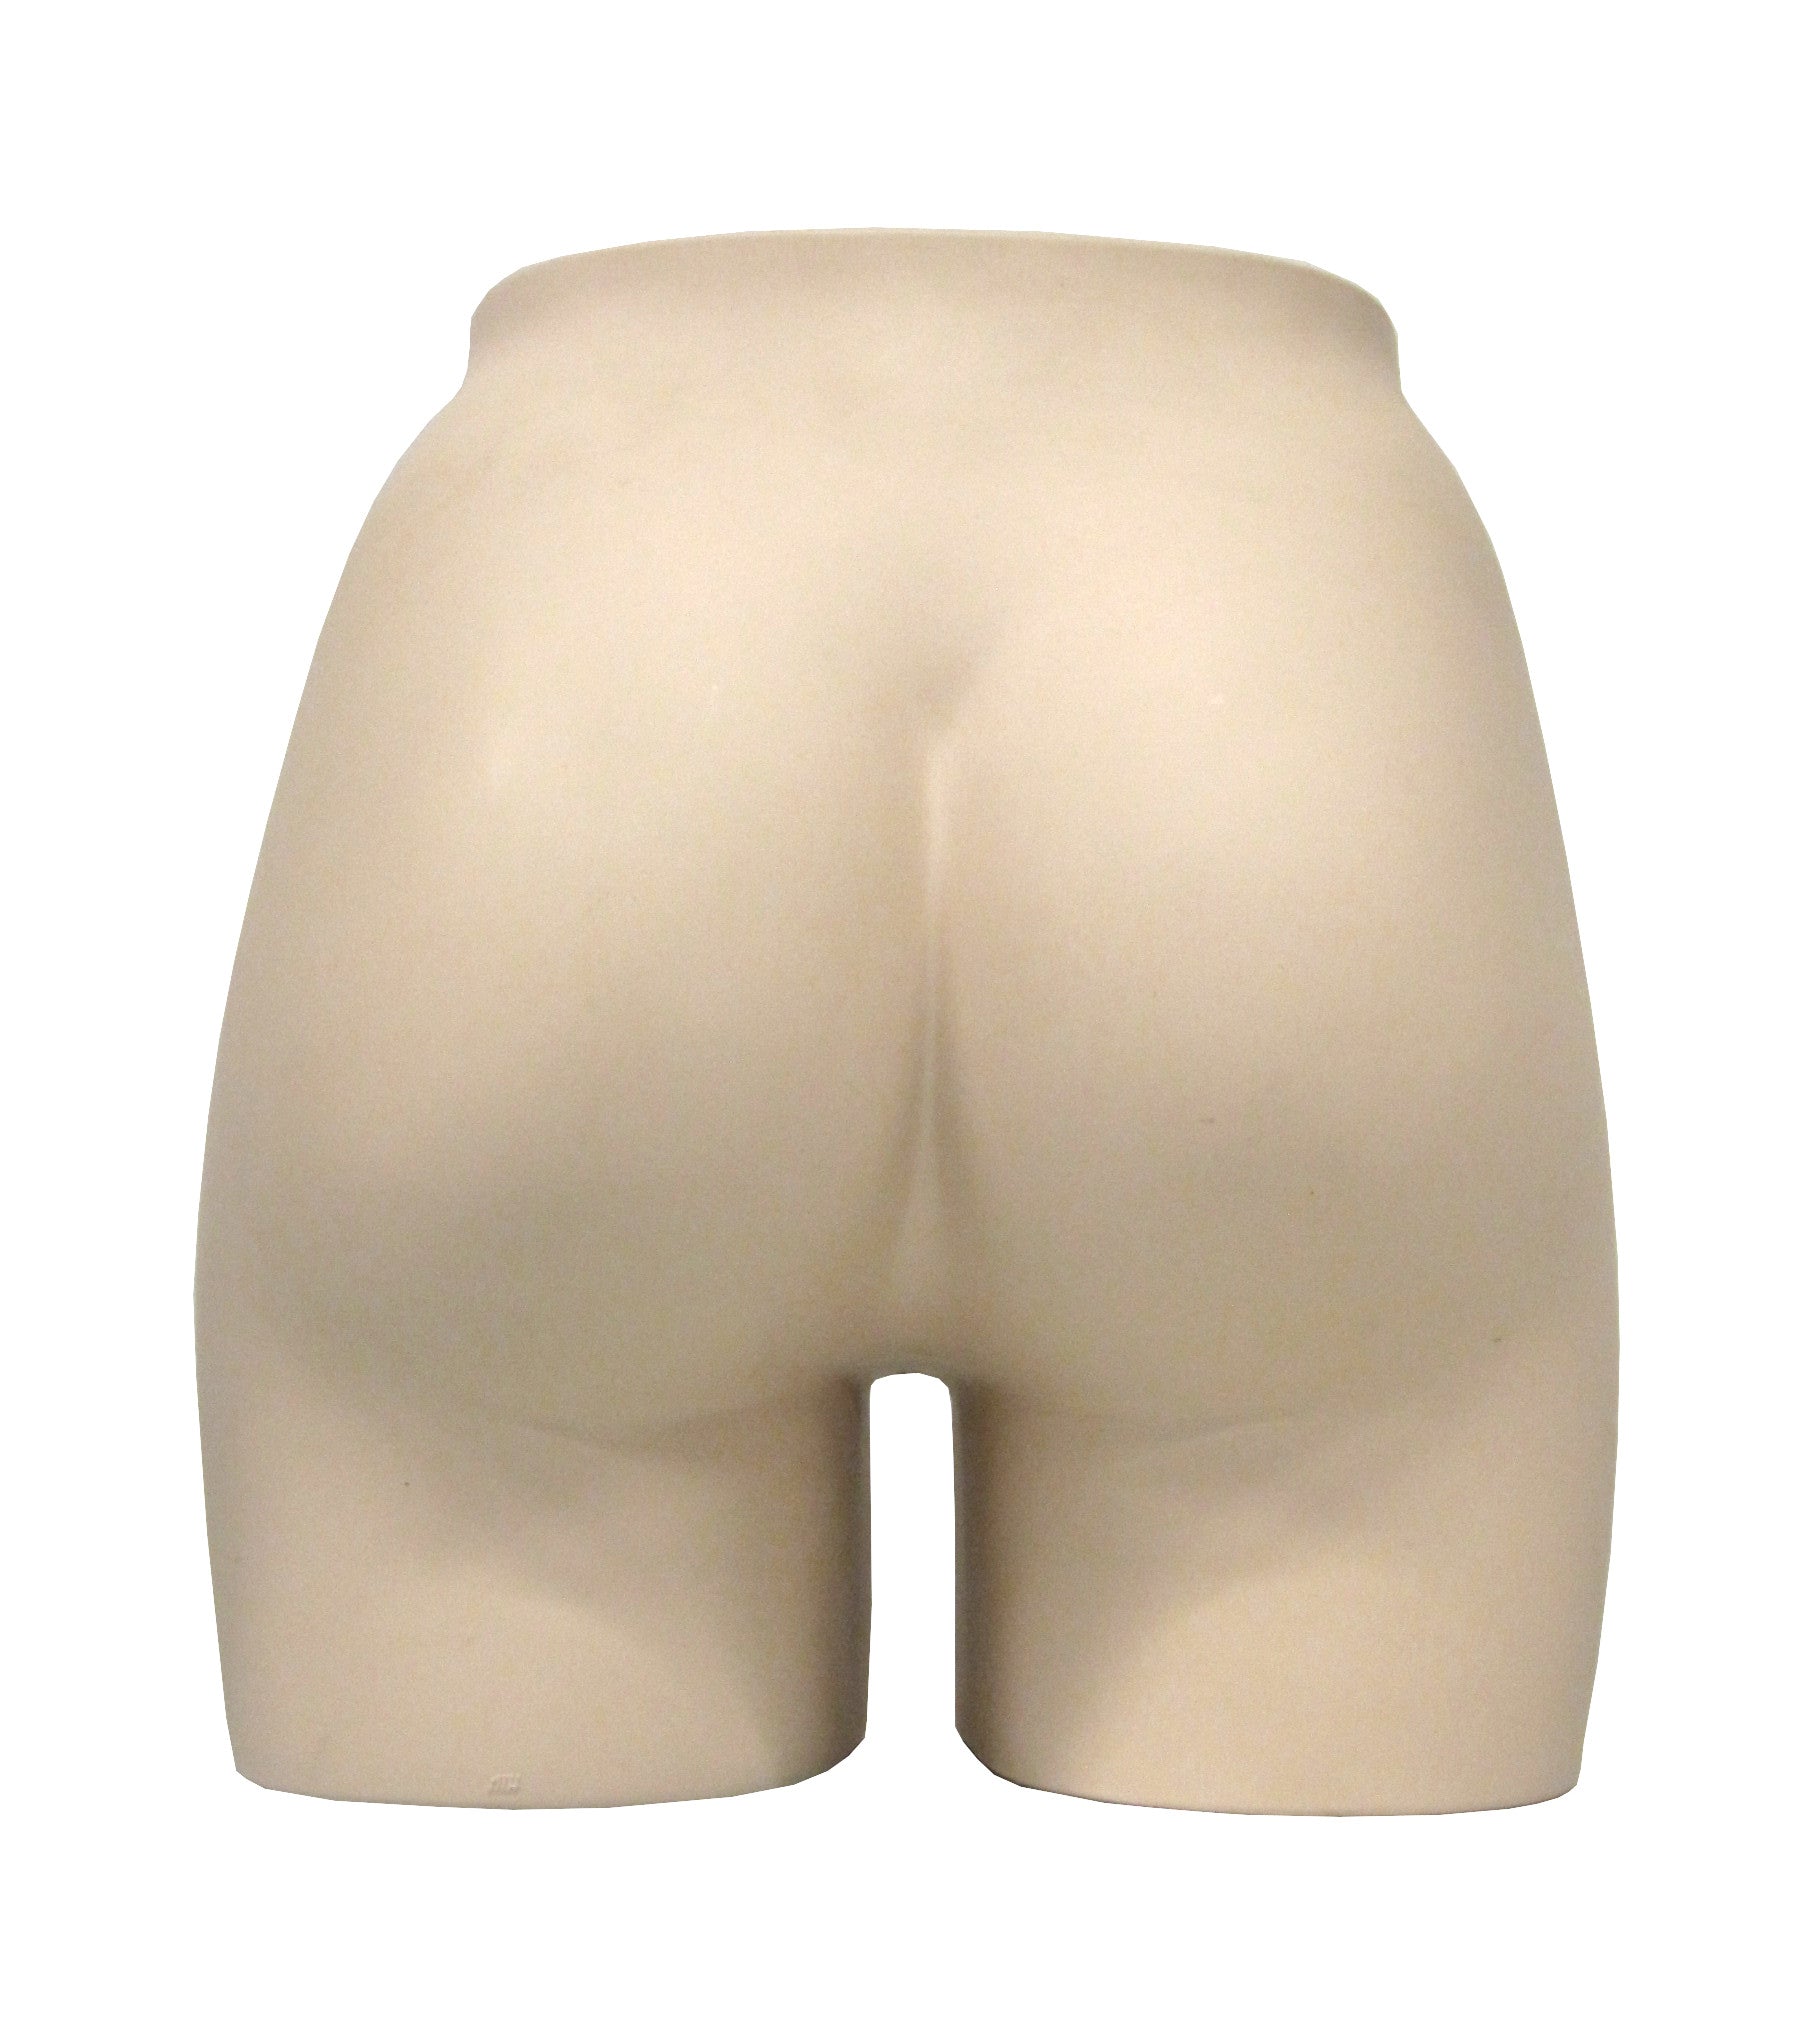 DittaDisplay Support sous-vêtement femme (partie postérieure) Woman pelvis shape display form halter damenunterhose vorderseite chair